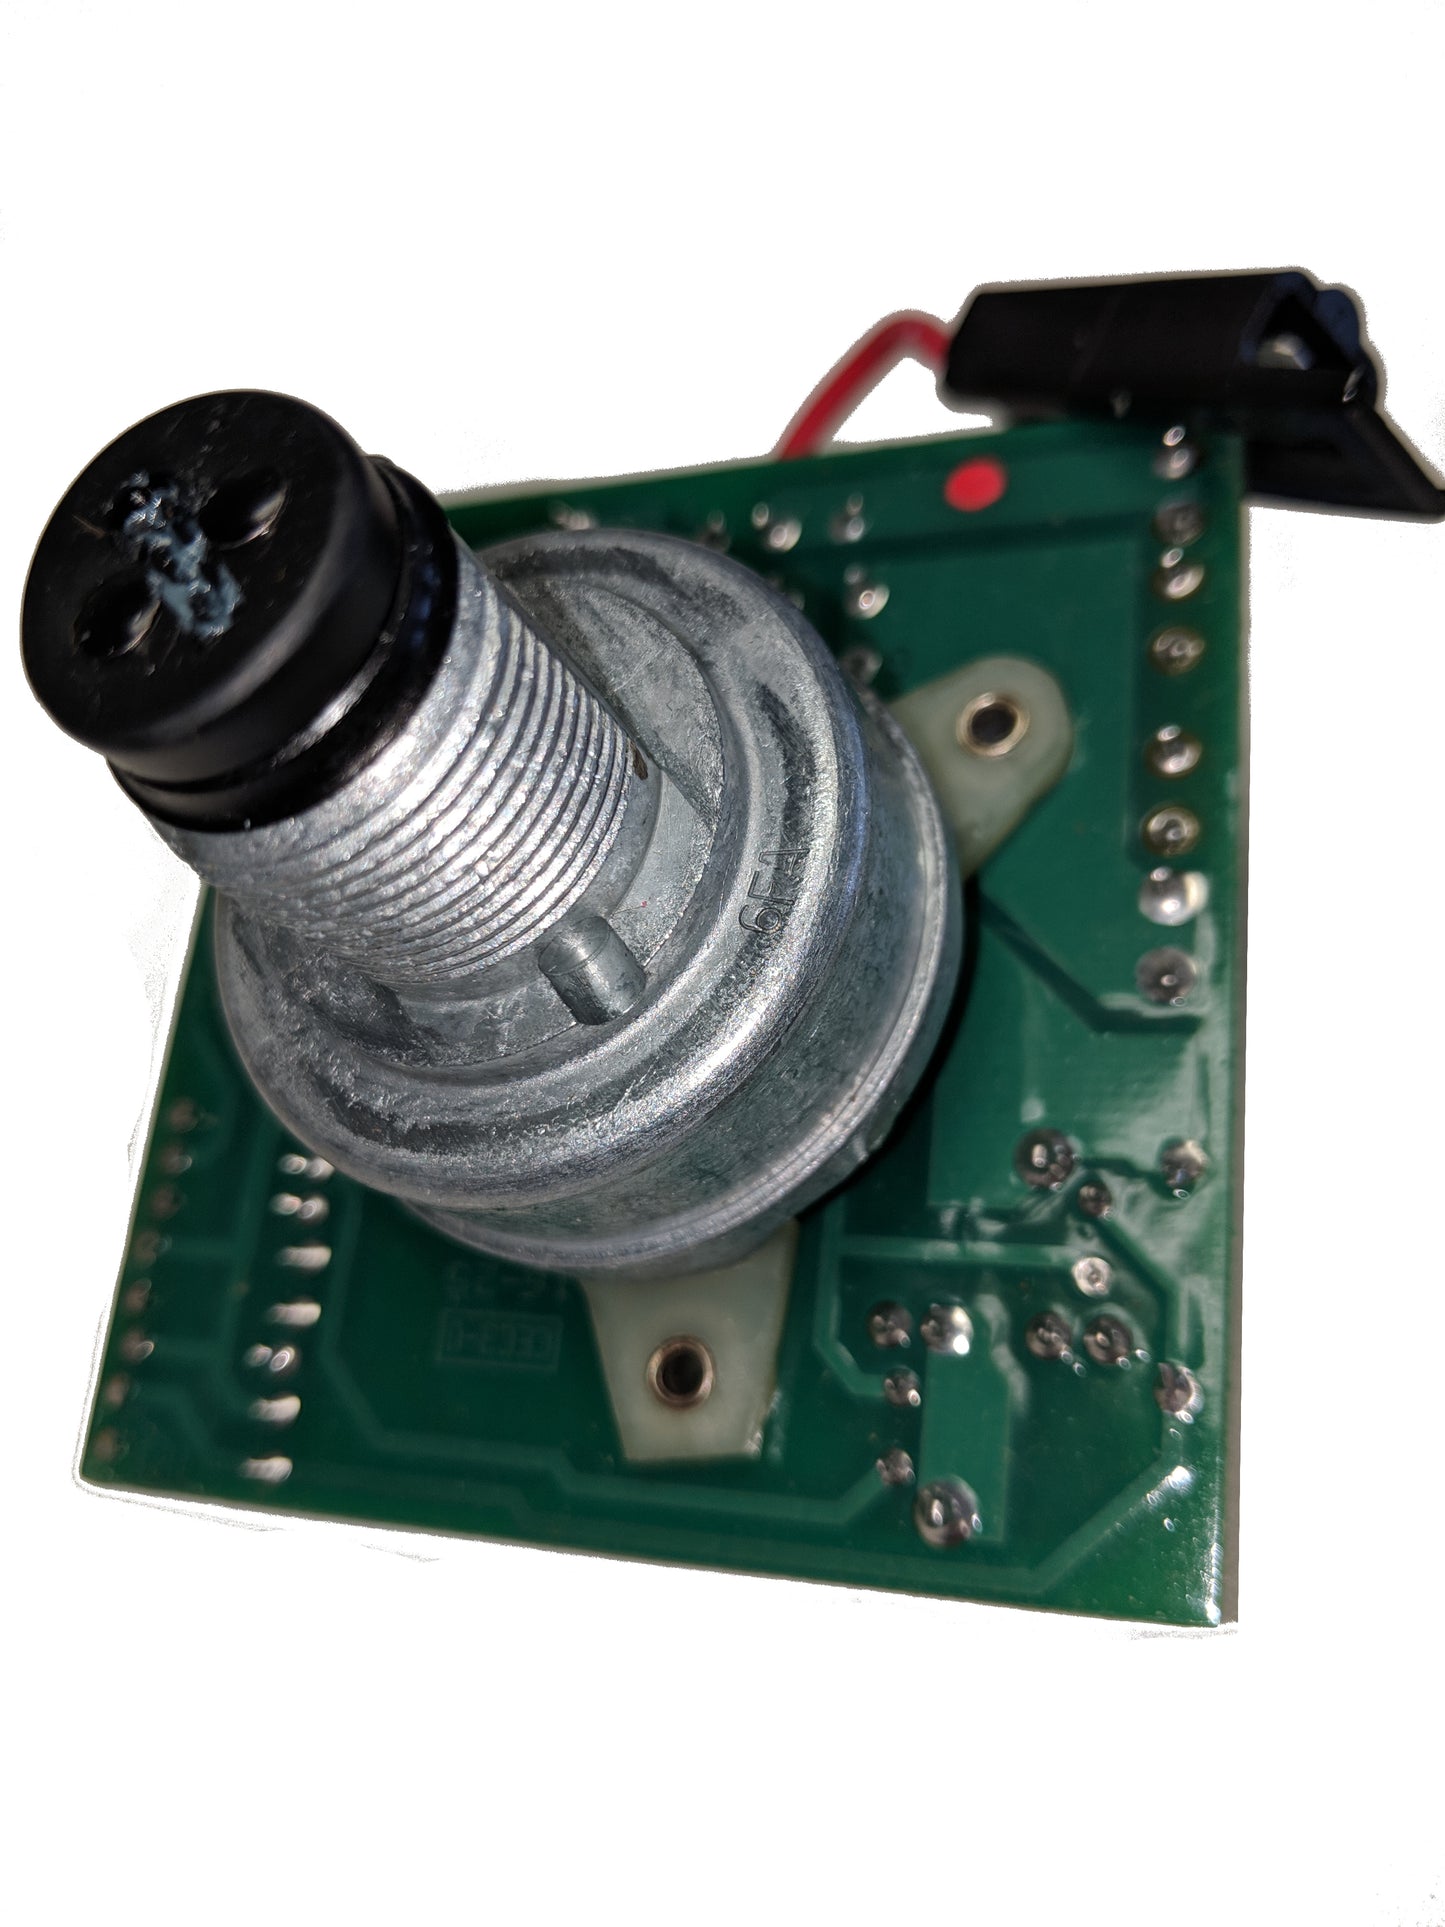 John Deere Original Equipment Ignition Switch - AM120105